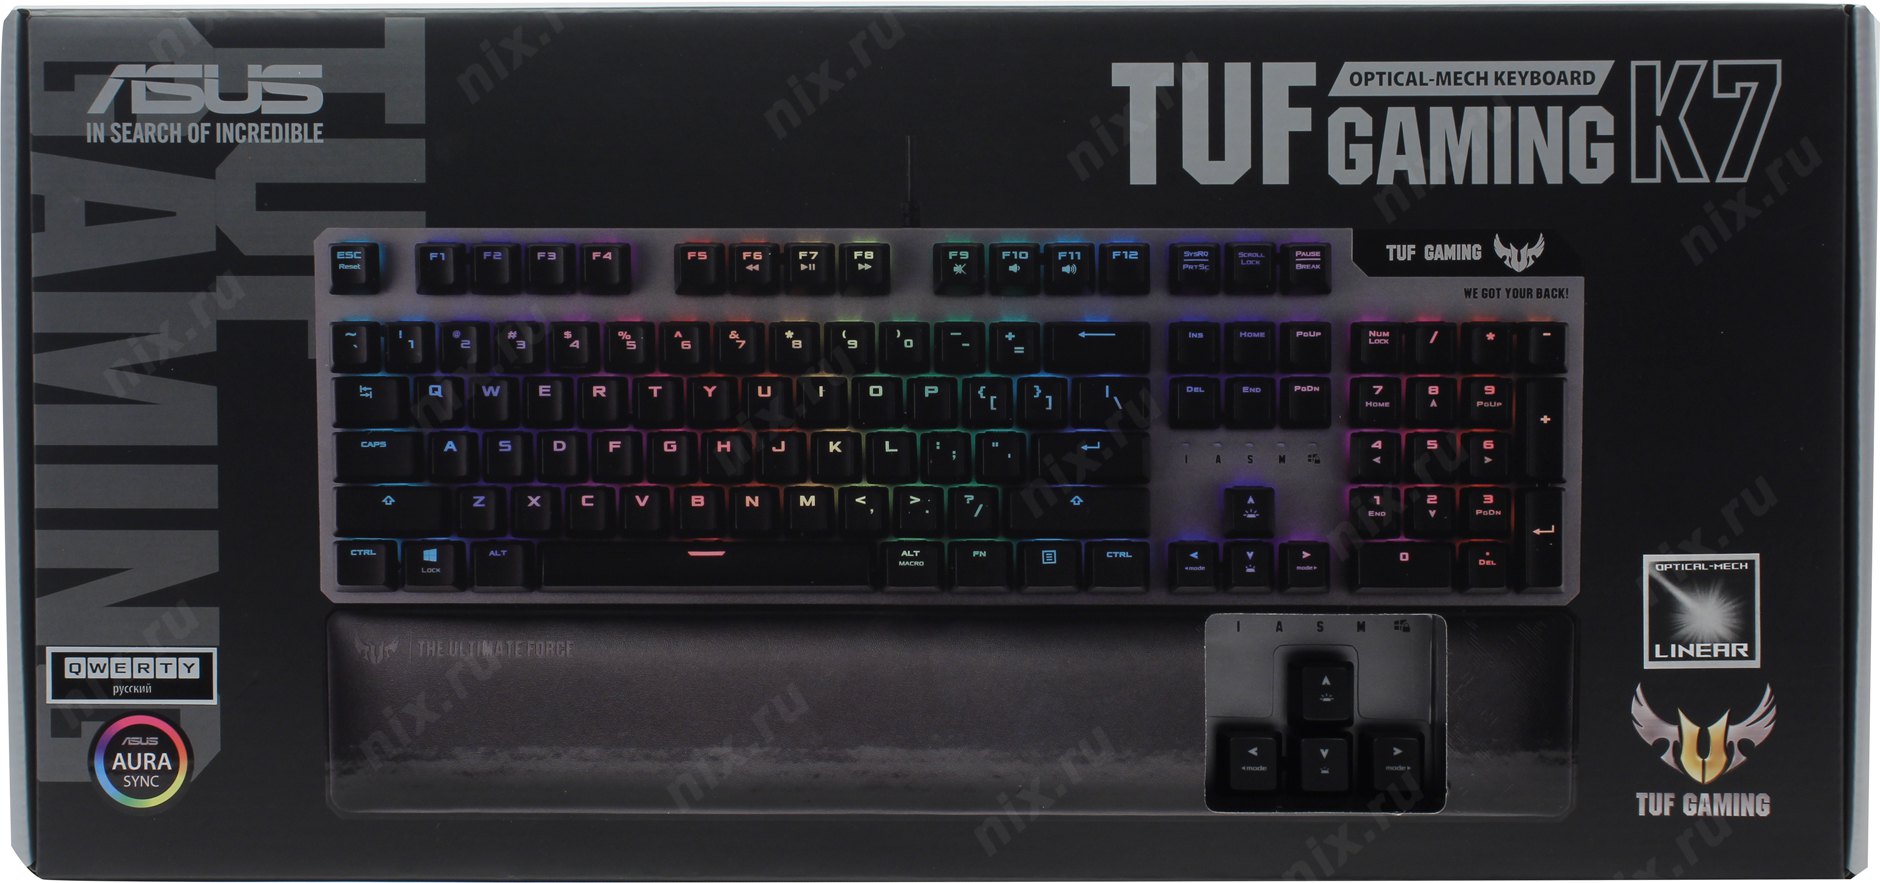 Tuf gaming k3. ASUS TUF Keyboard. Клавиатура асус туф гейминг. Клавиатура асус ТАФ гейминг. Клавиатура ASUS TUF Gaming k7.